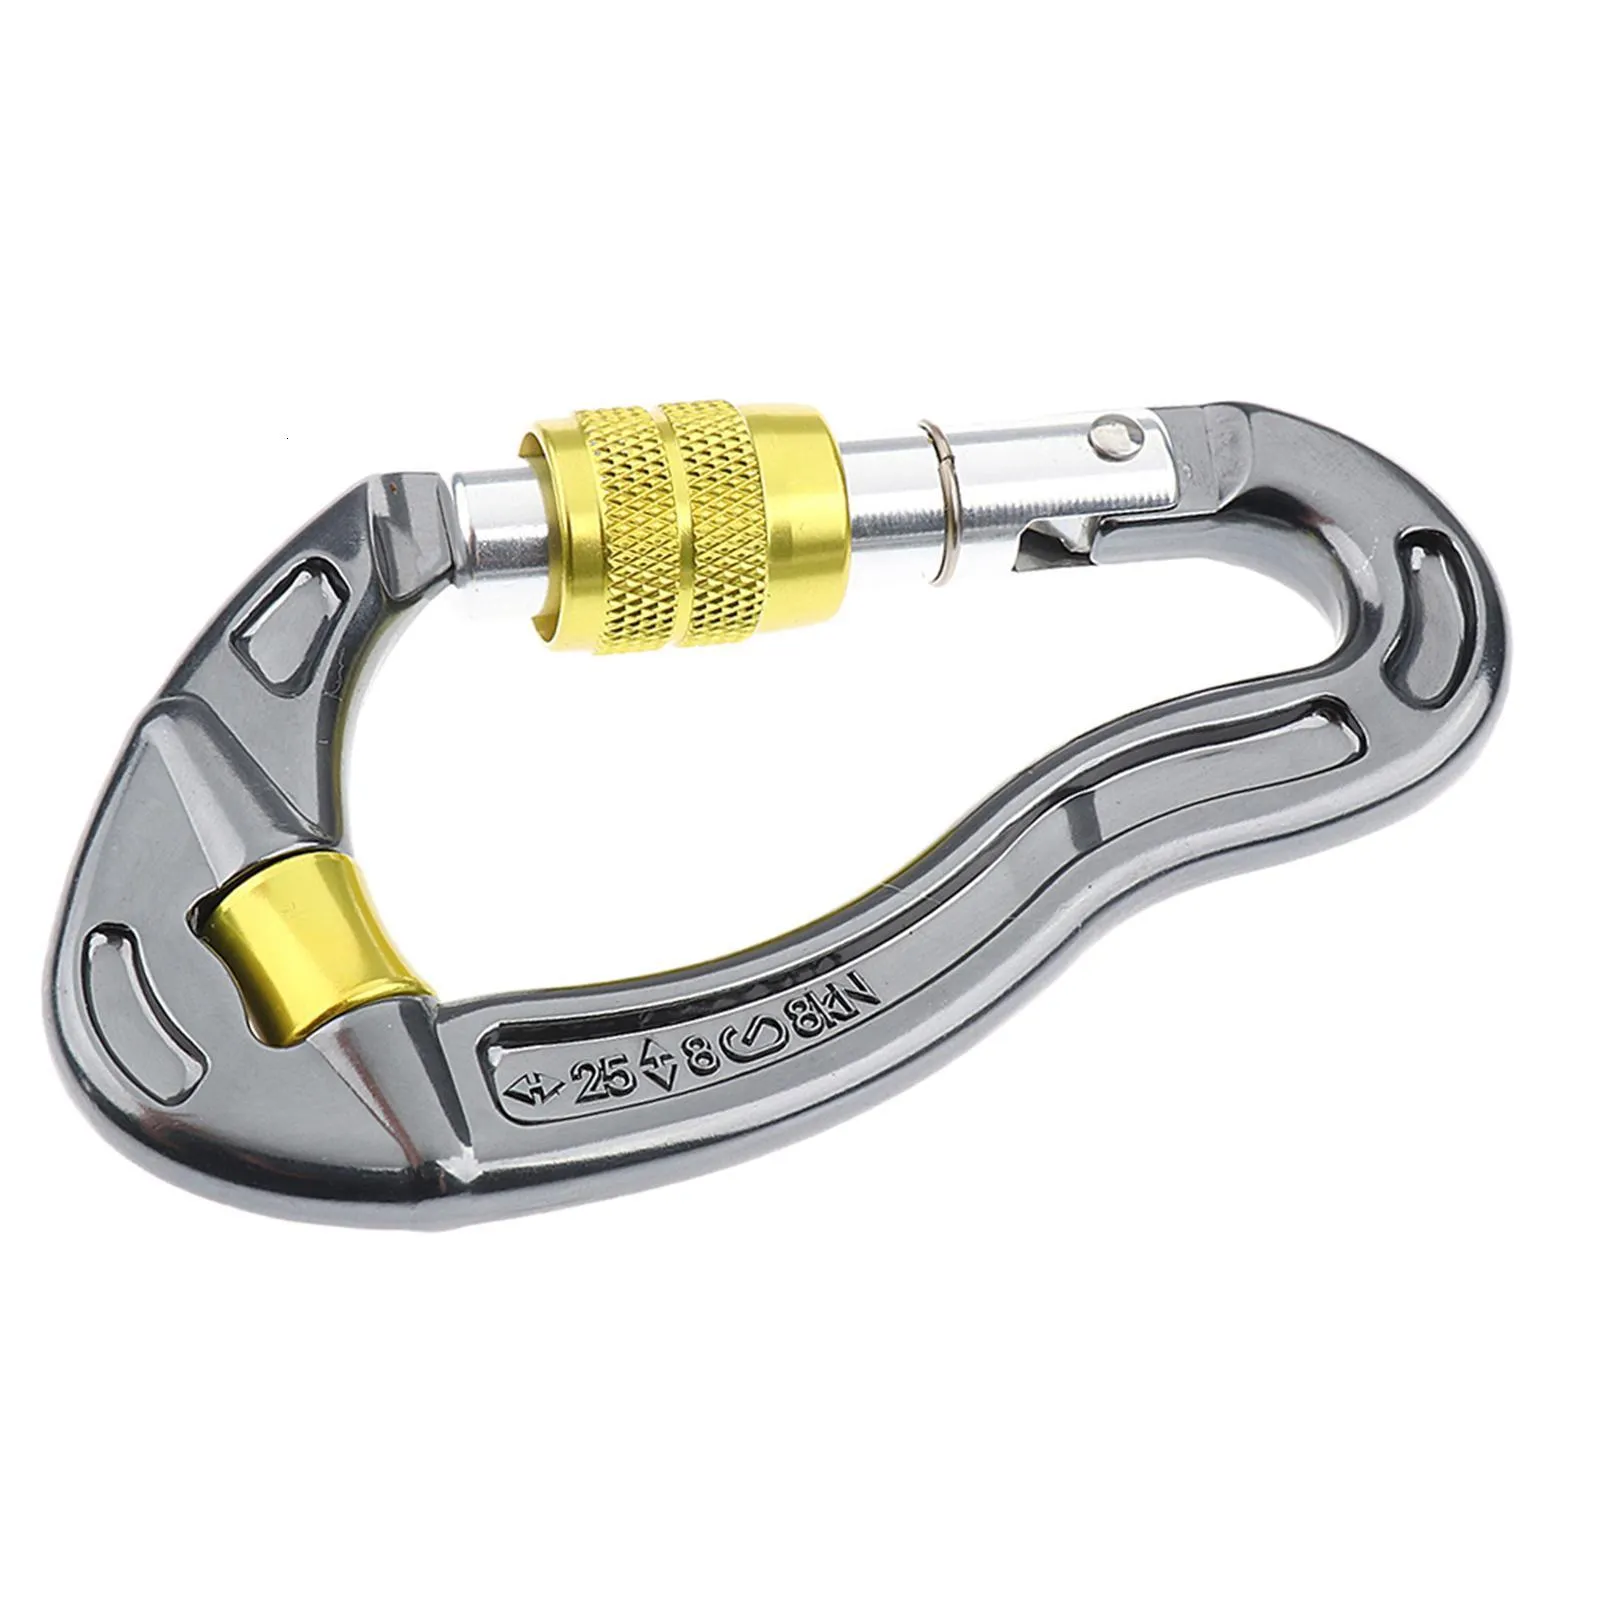 25KN climbing carabiner keychain stainless steel screw carabiner